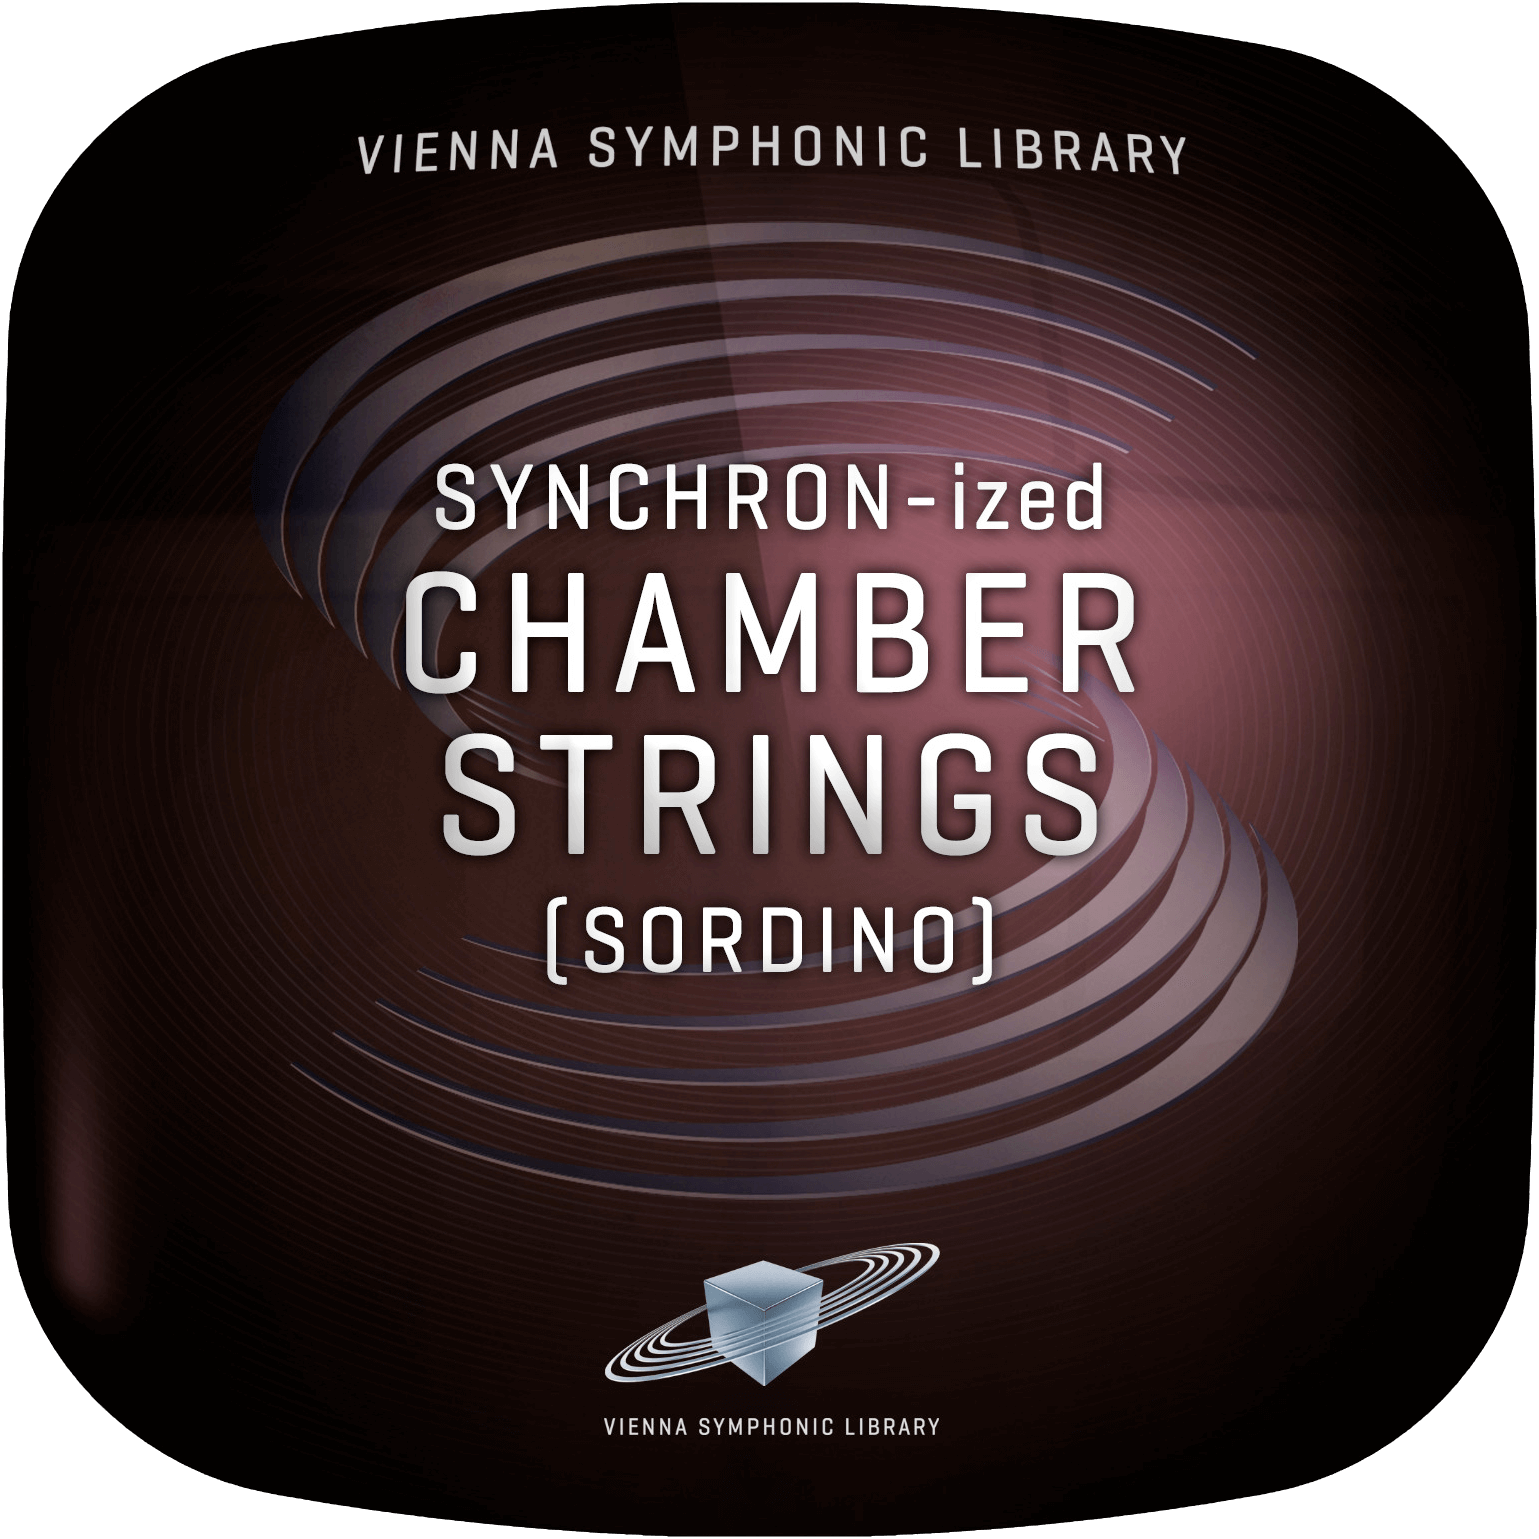 VSL Synchron-ized Chamber Strings Sordino